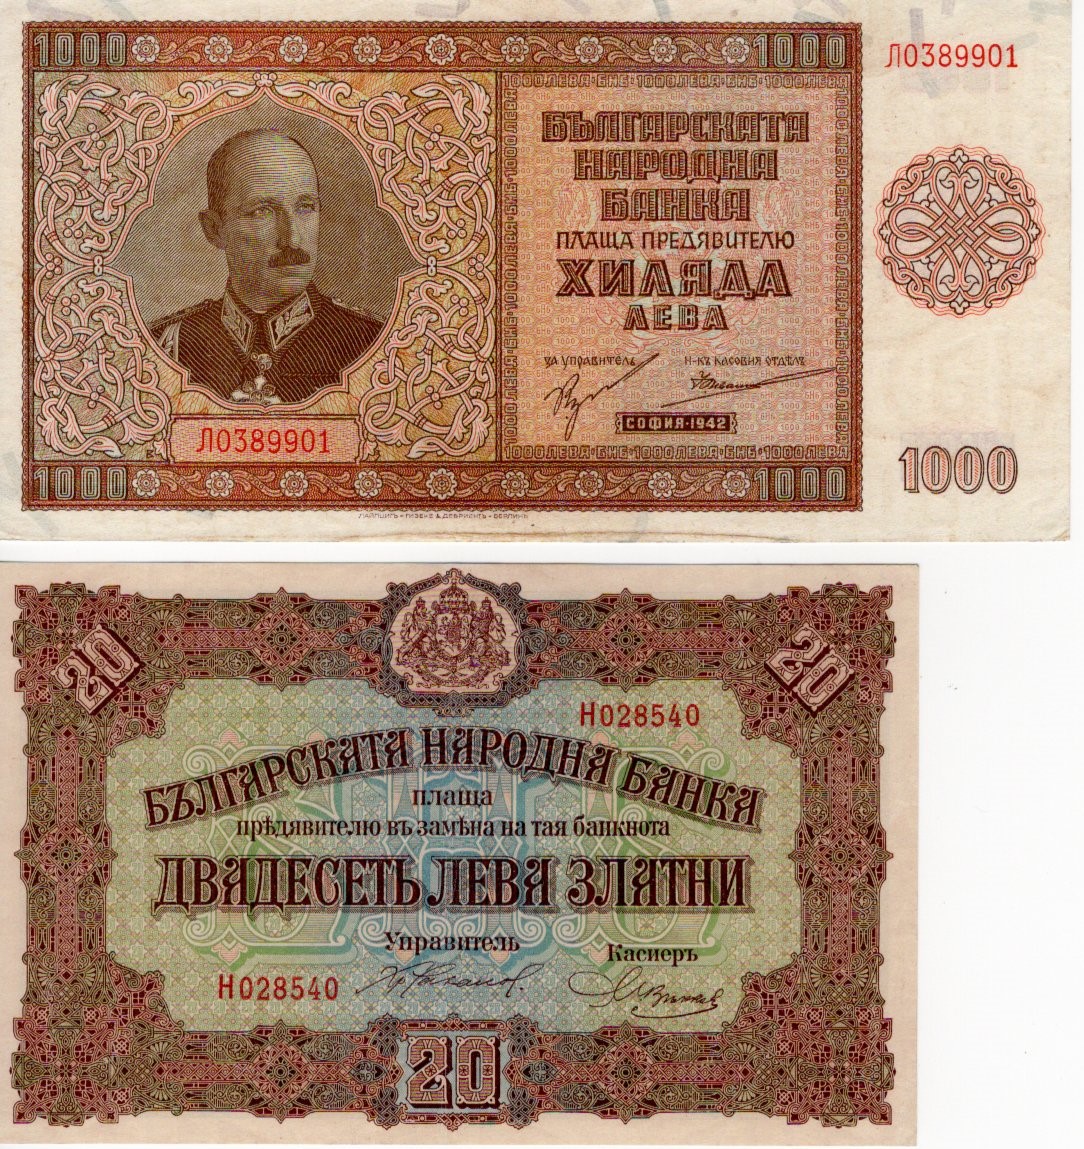 Bulgaria (2), 20 Leva Zlatni (Gold Leva) ND issued 1917, serial H 028540 (TBB B130a, Pick23a) EF,